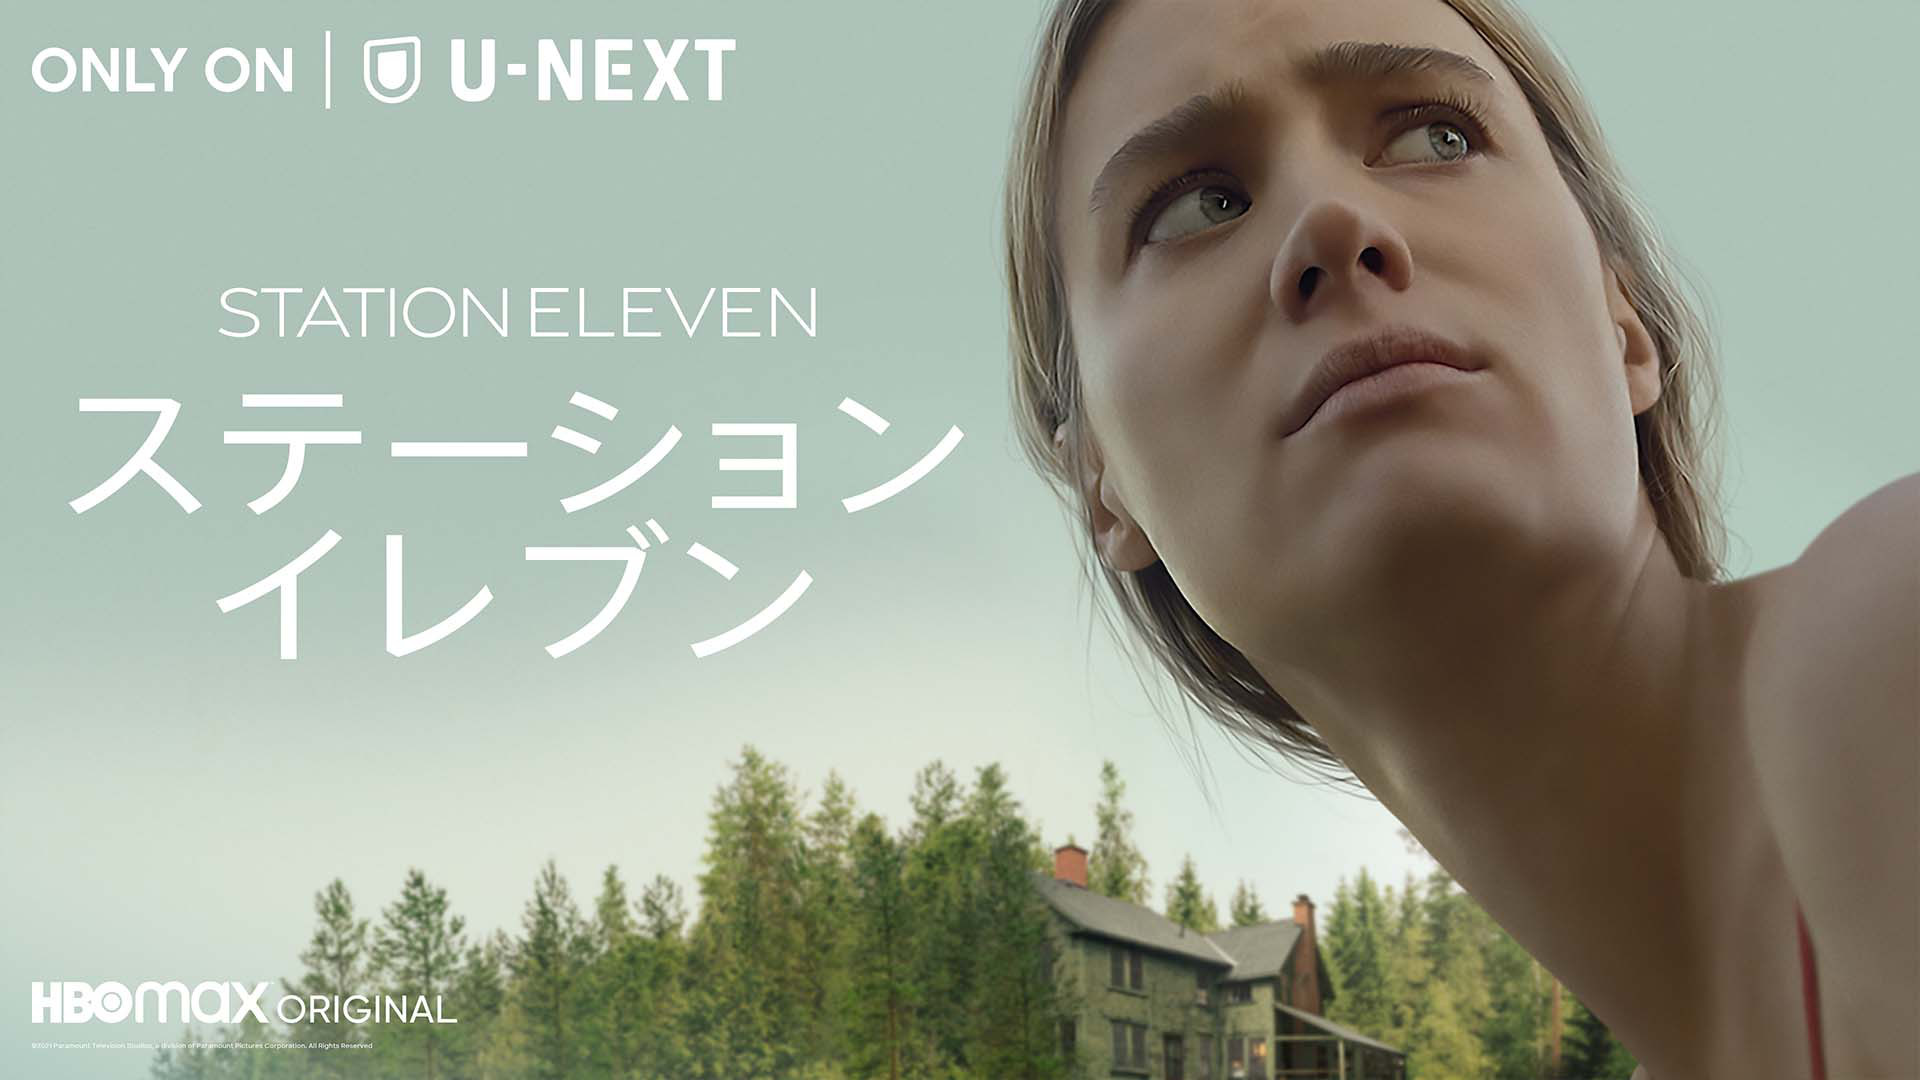 HBO Max Original ステーション・イレブン only on U-NEXT